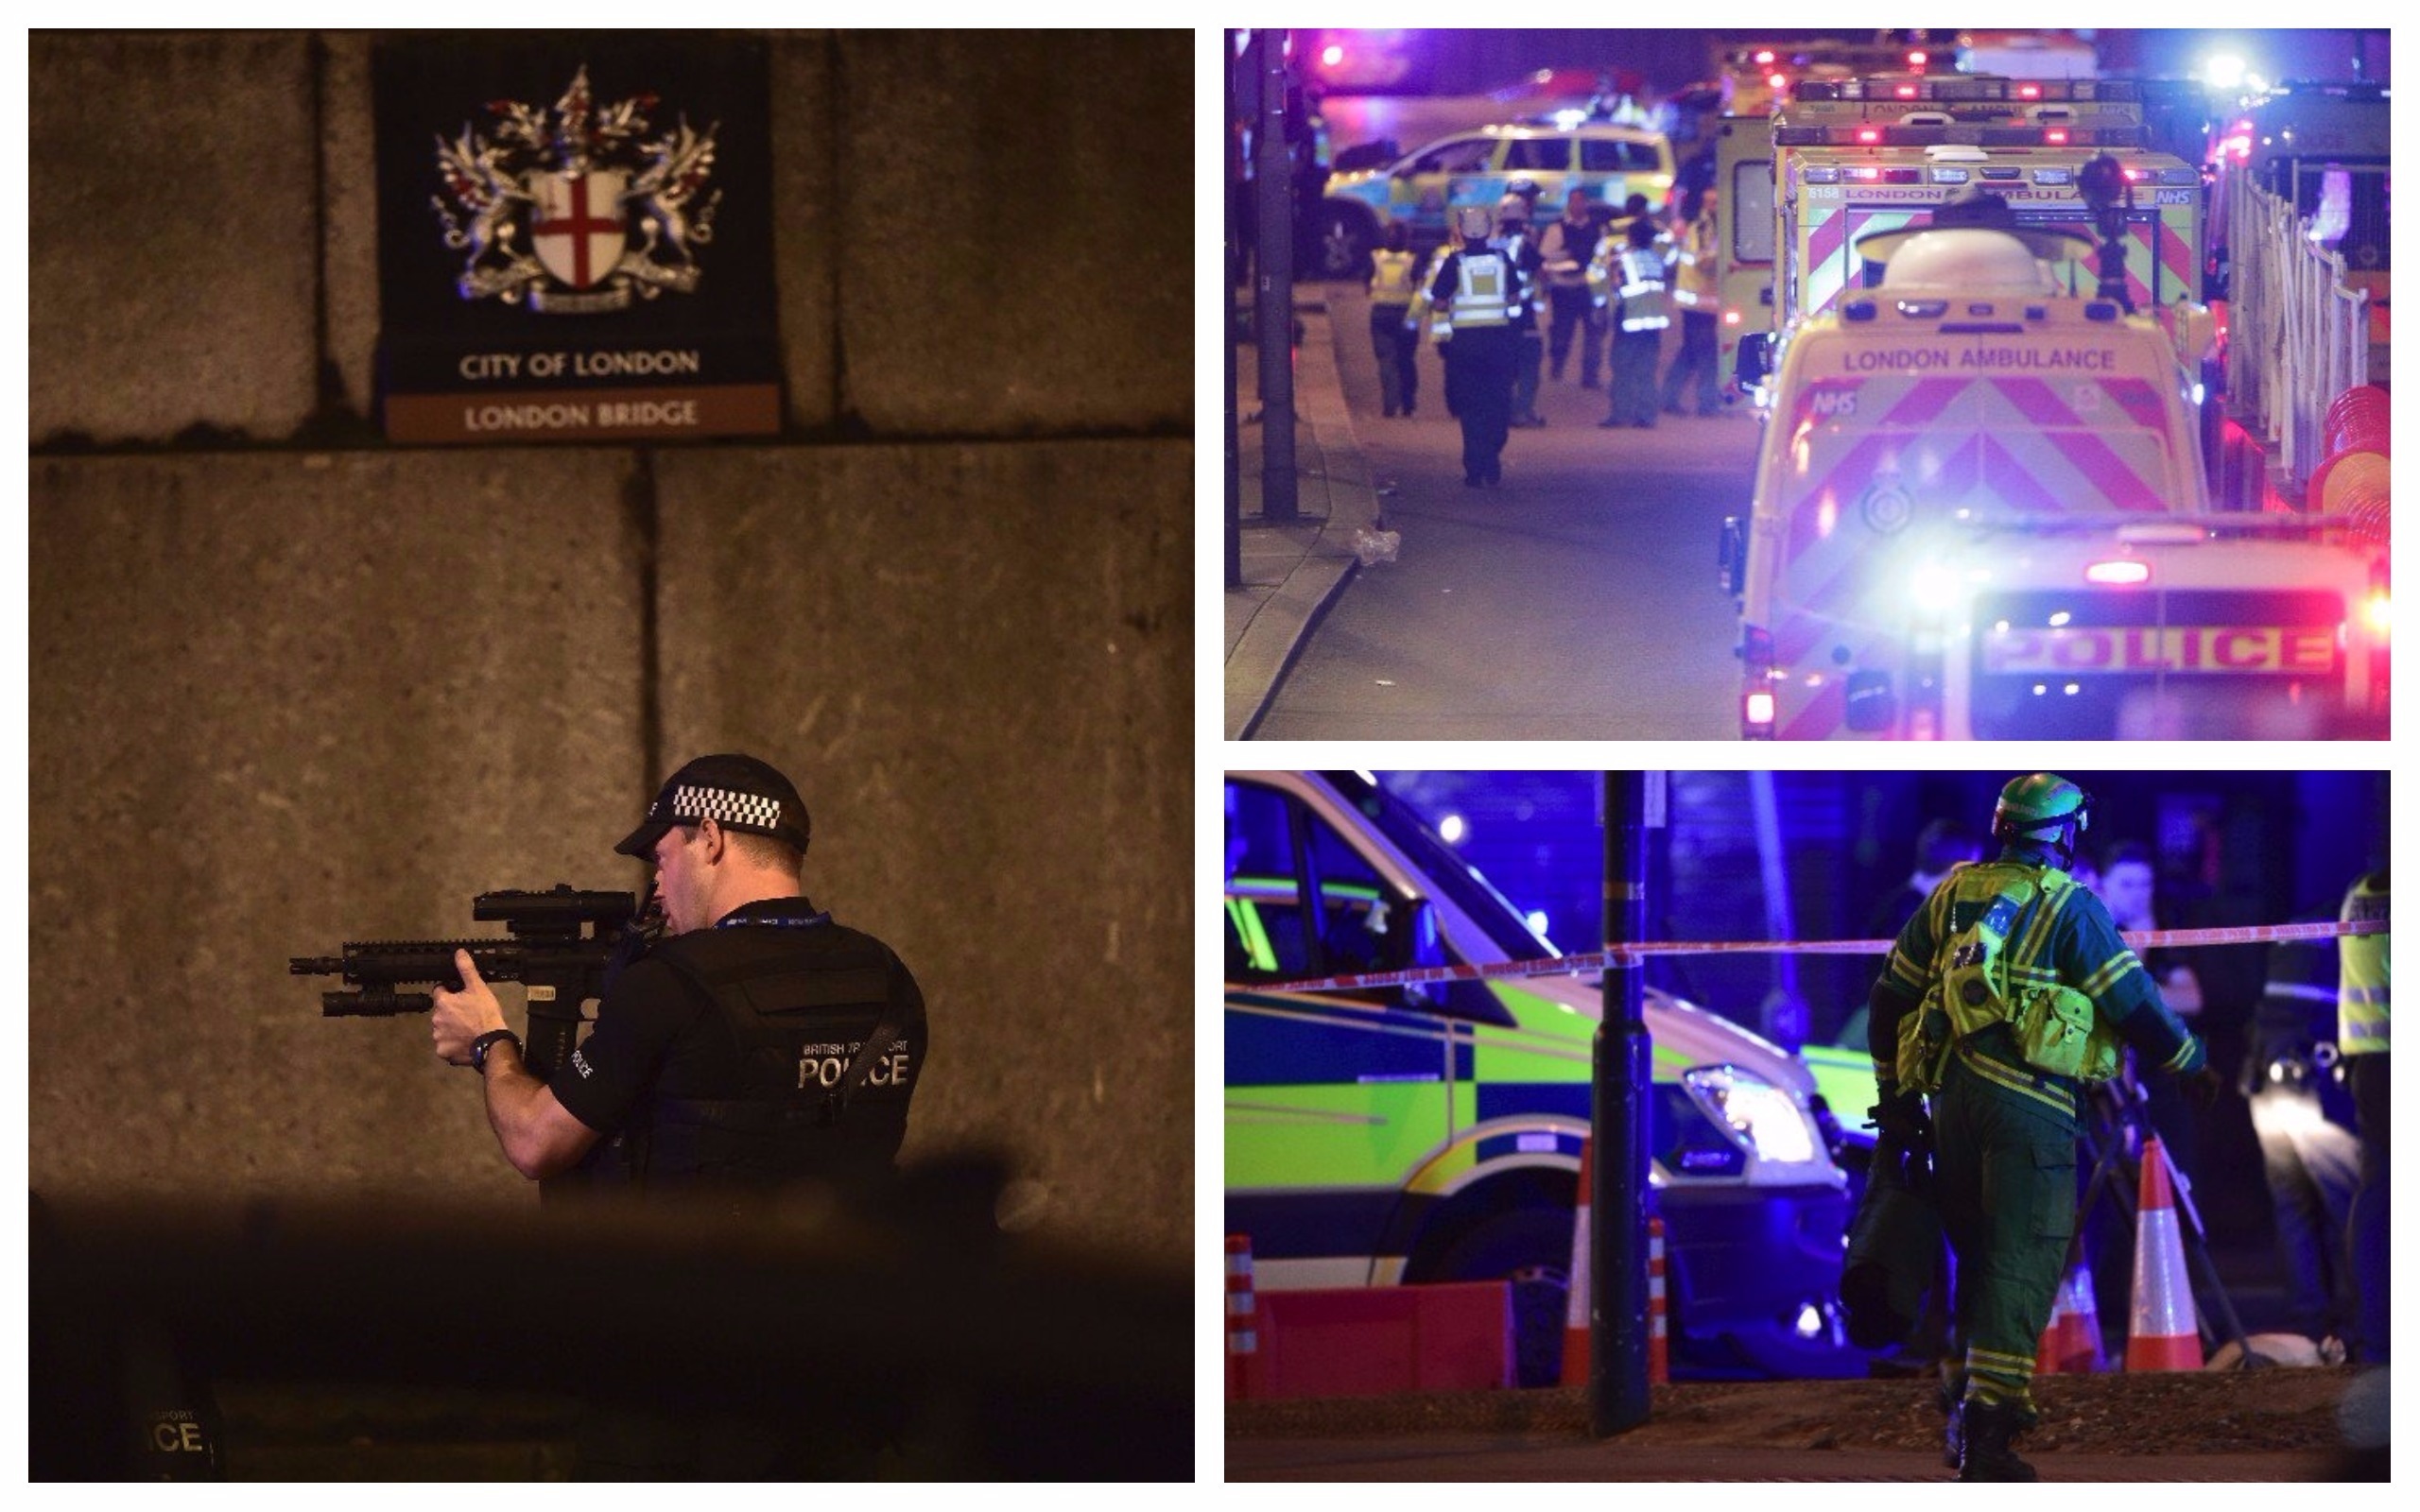 Armed police at the scene on London Bridge